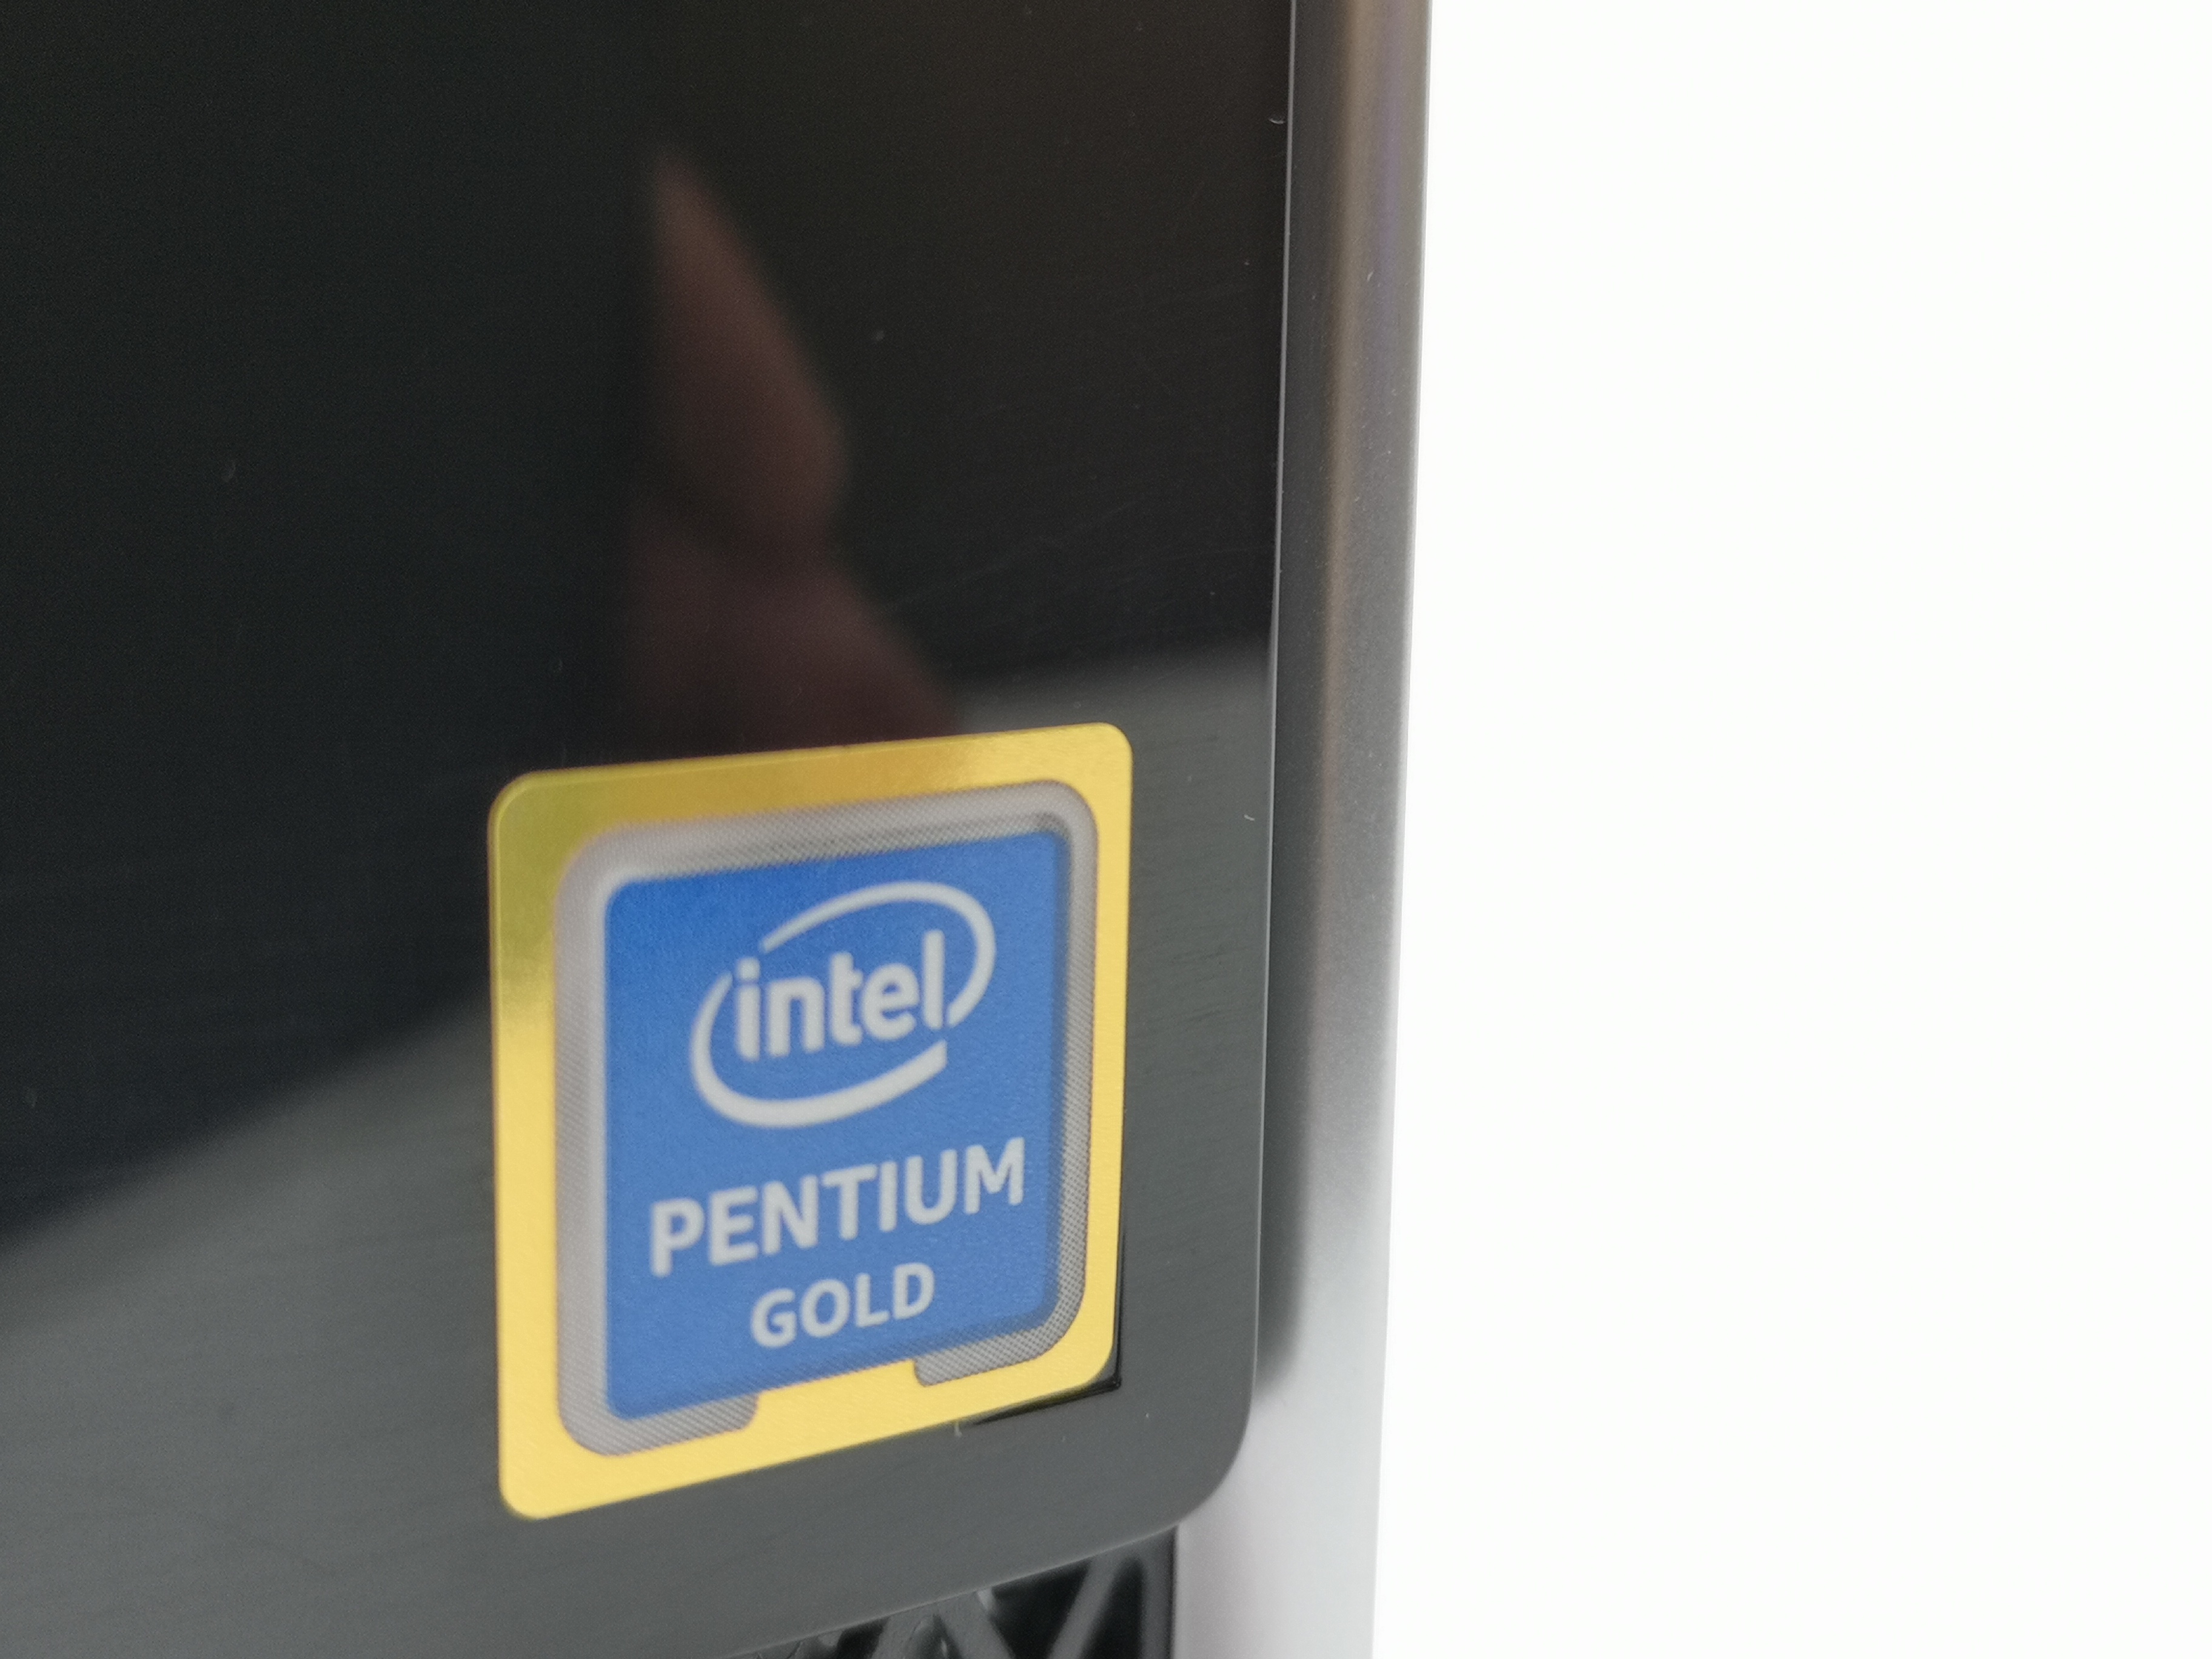 Refurbished Dell Inspiron 3470 SFF Desktop PC